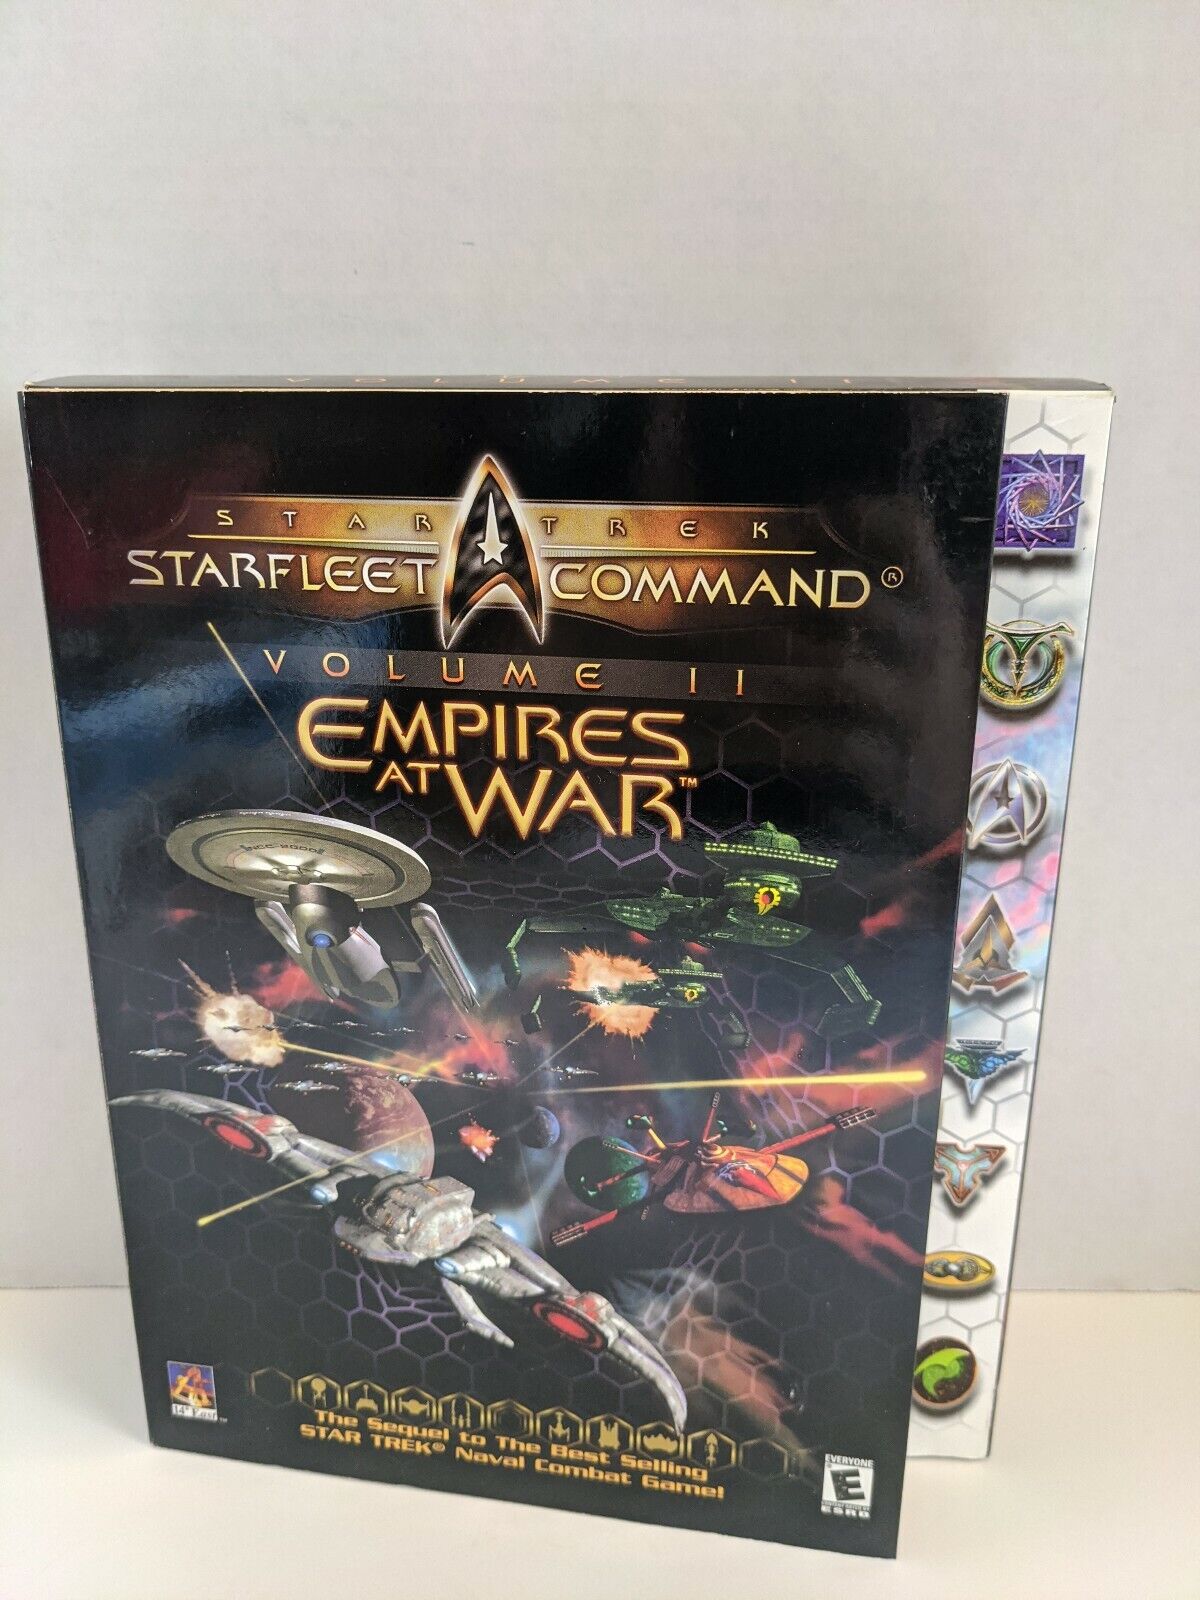 Star Trek Starfleet Command Volume II Empires At War New Big Box PC Game SEALED